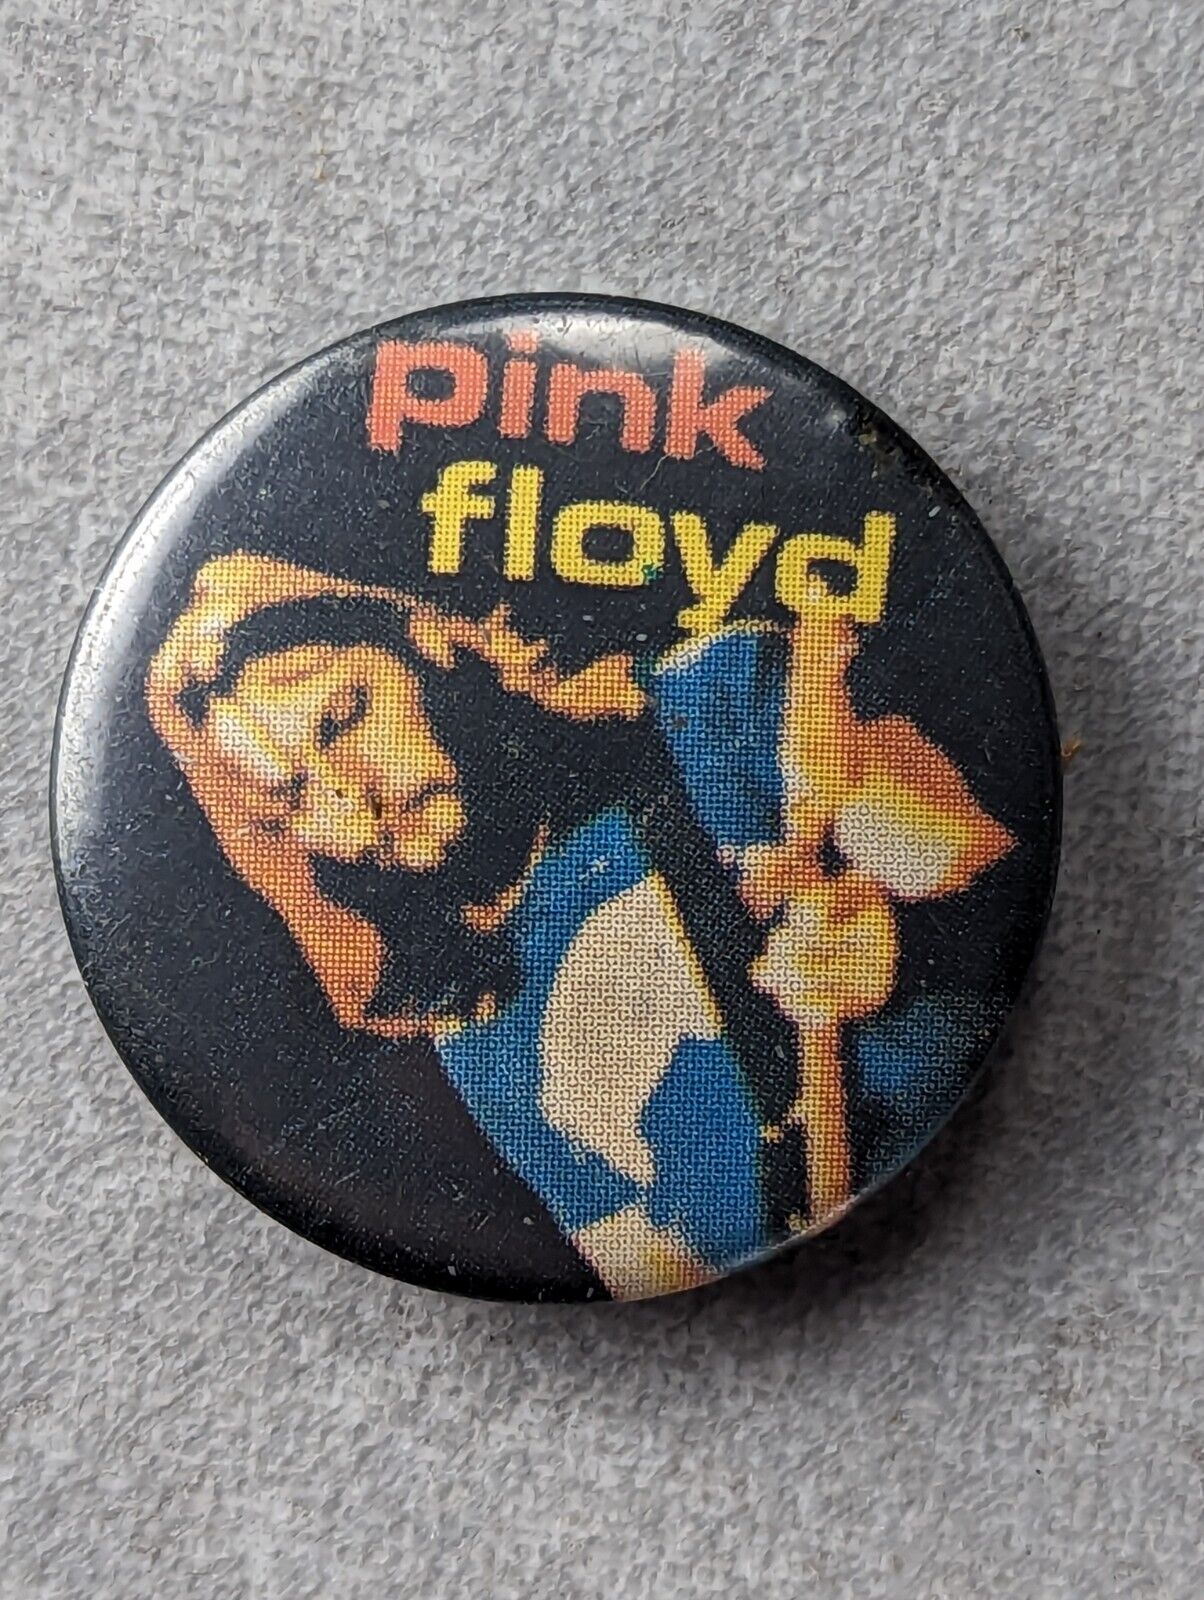 Vintage 80s Pink Floyd PIN BADGE Purchased Around 1986